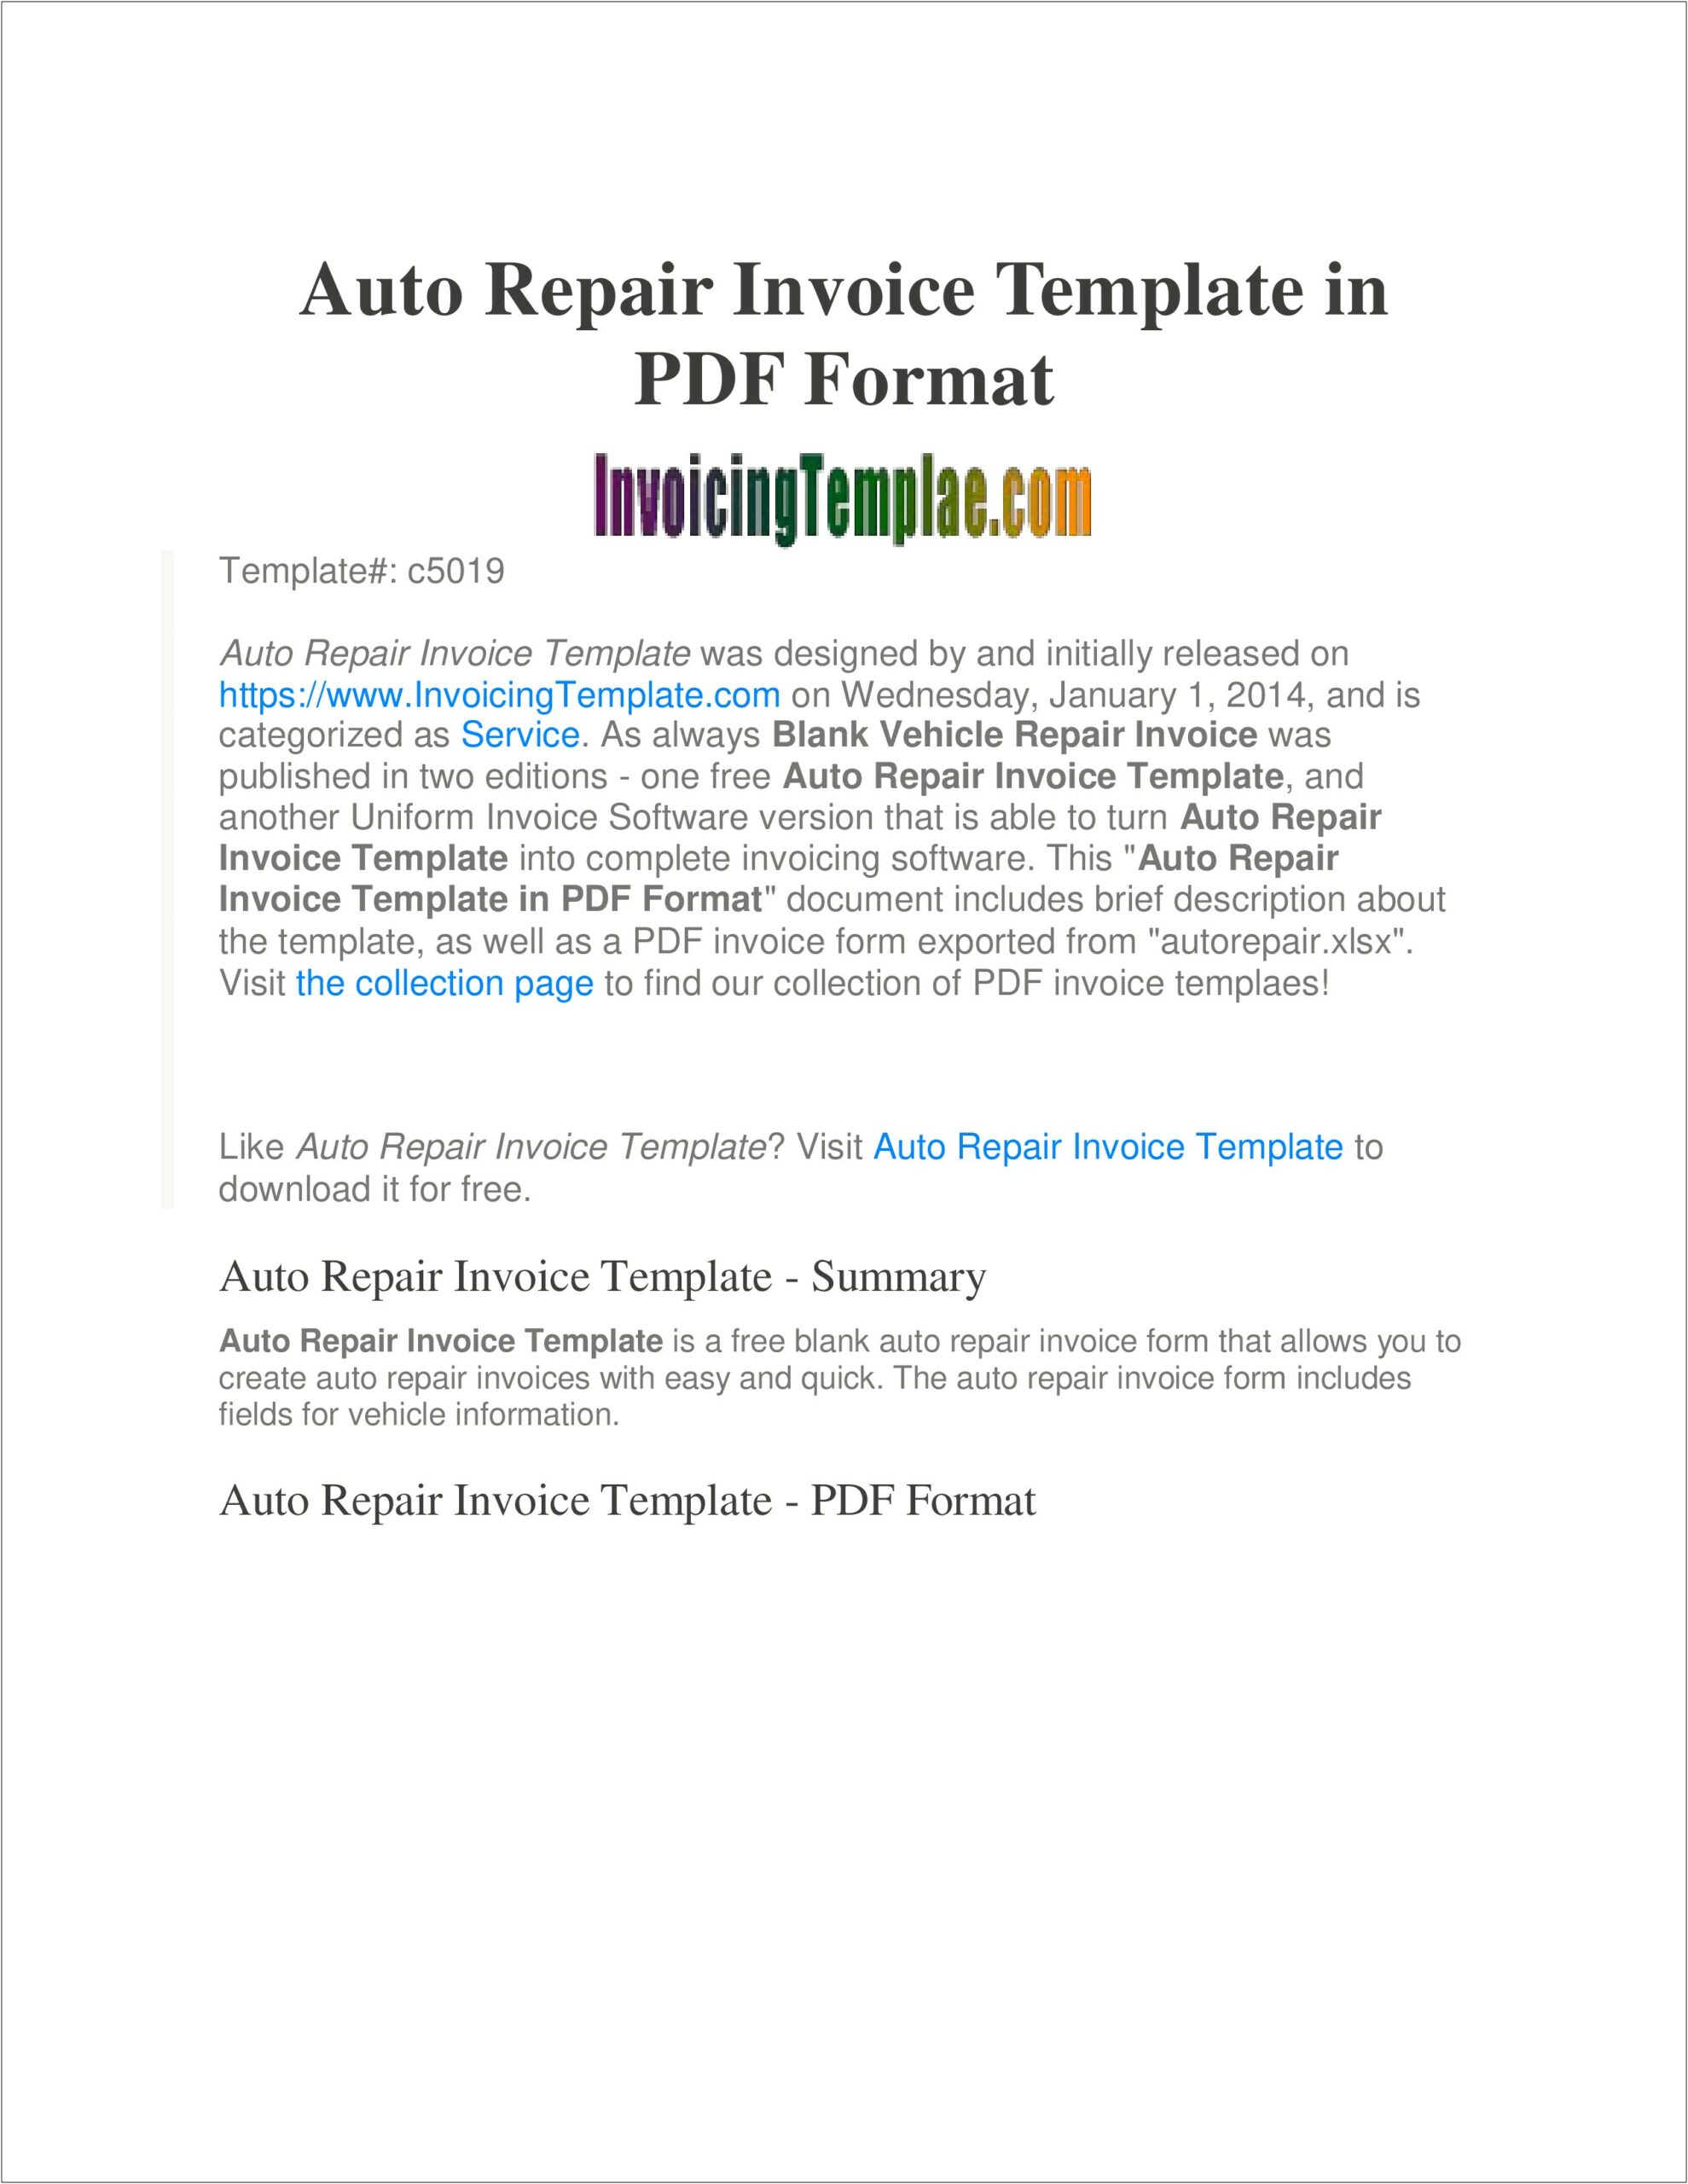 Downloadable Free Printable Auto Repair Invoice Template